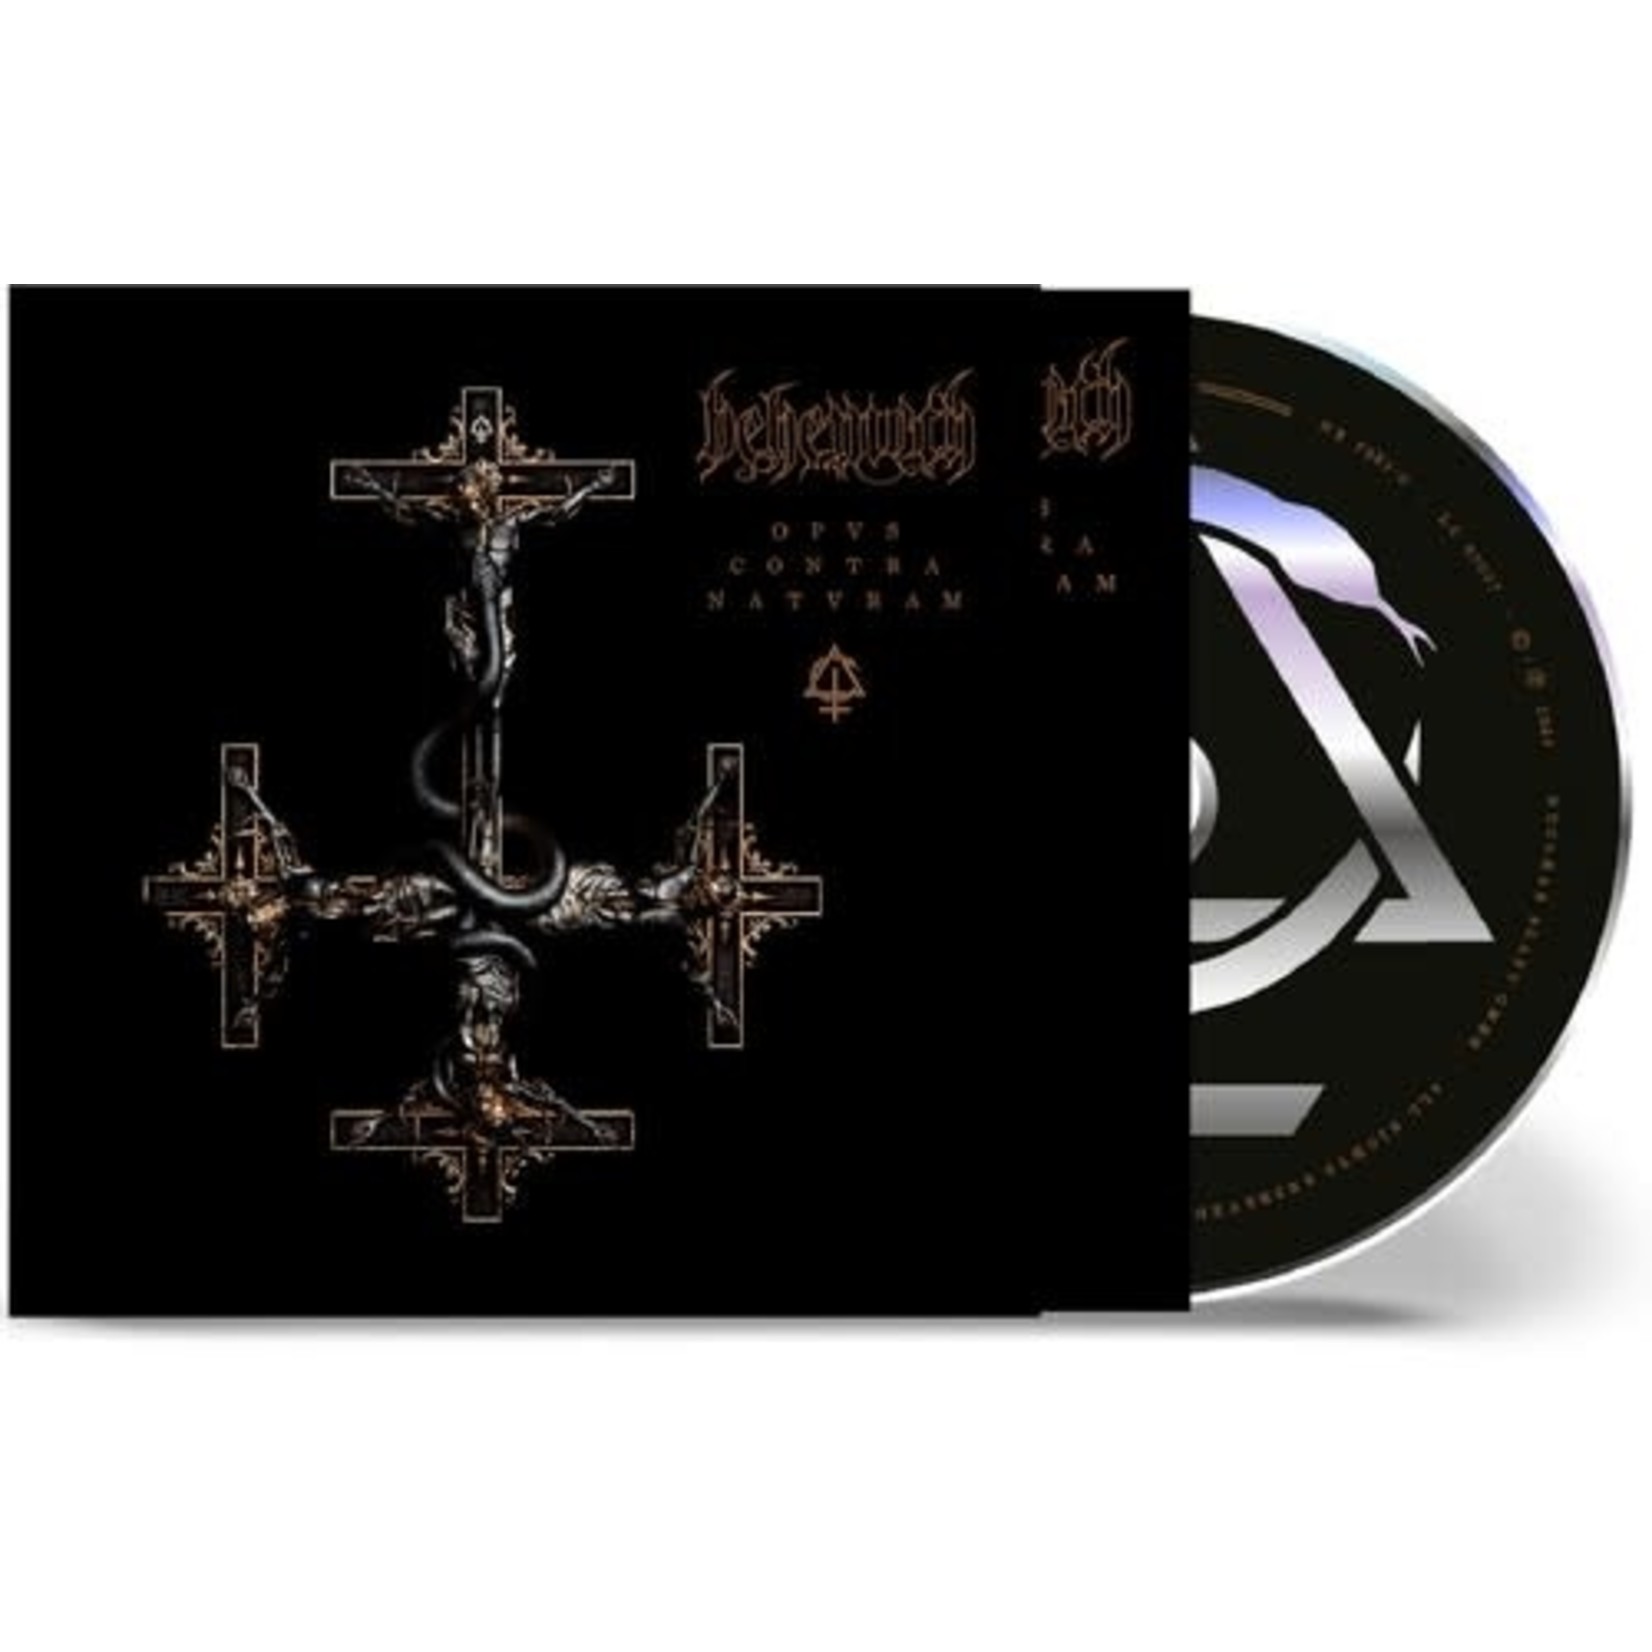 Behemoth - Opvs Contra Natvram [CD]